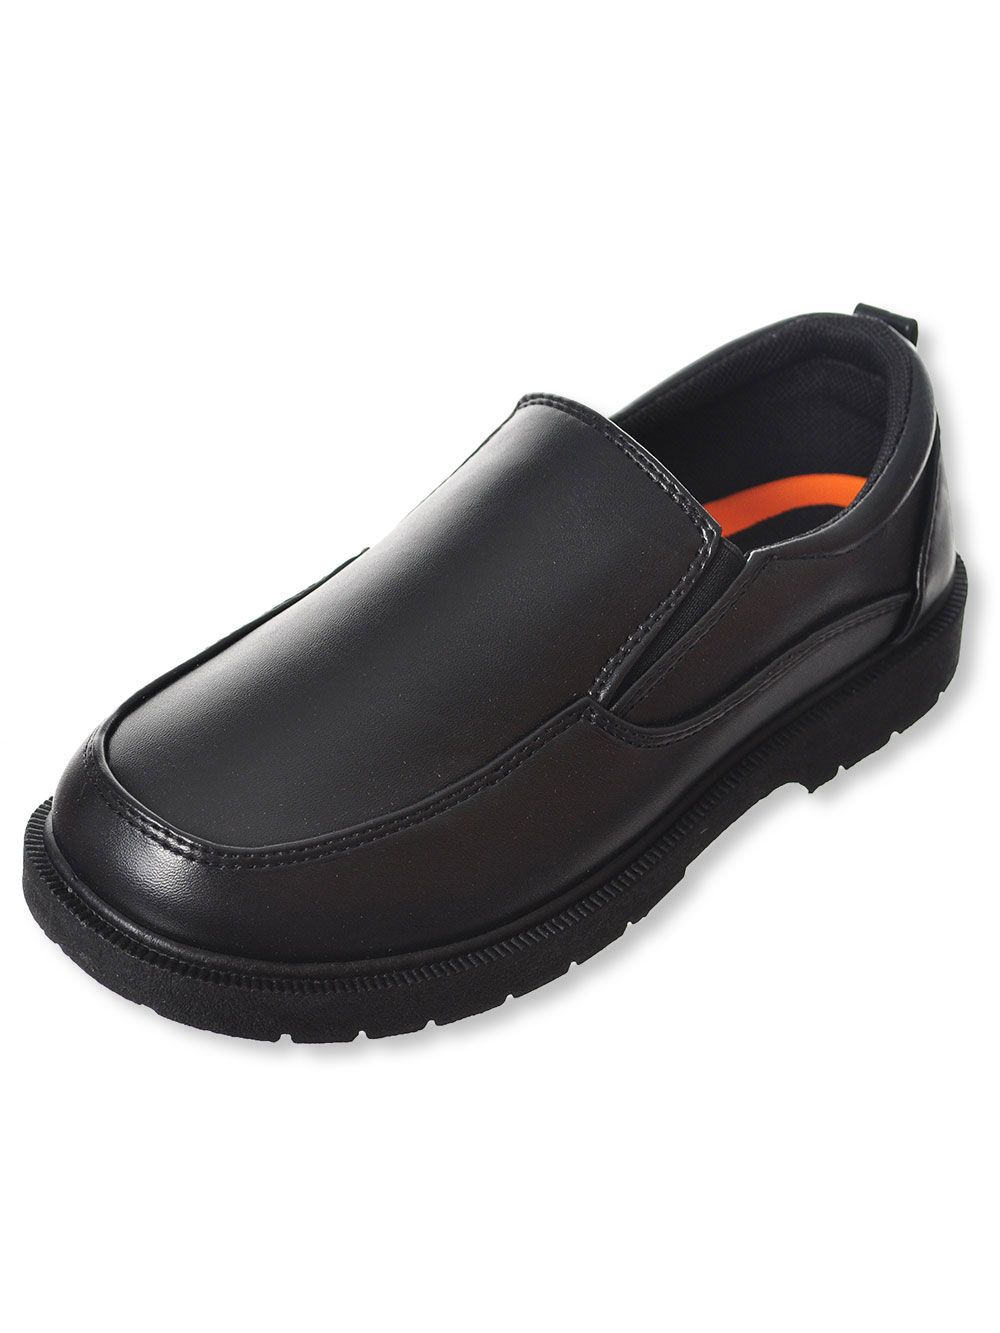 Boys' Slip-On School Shoes